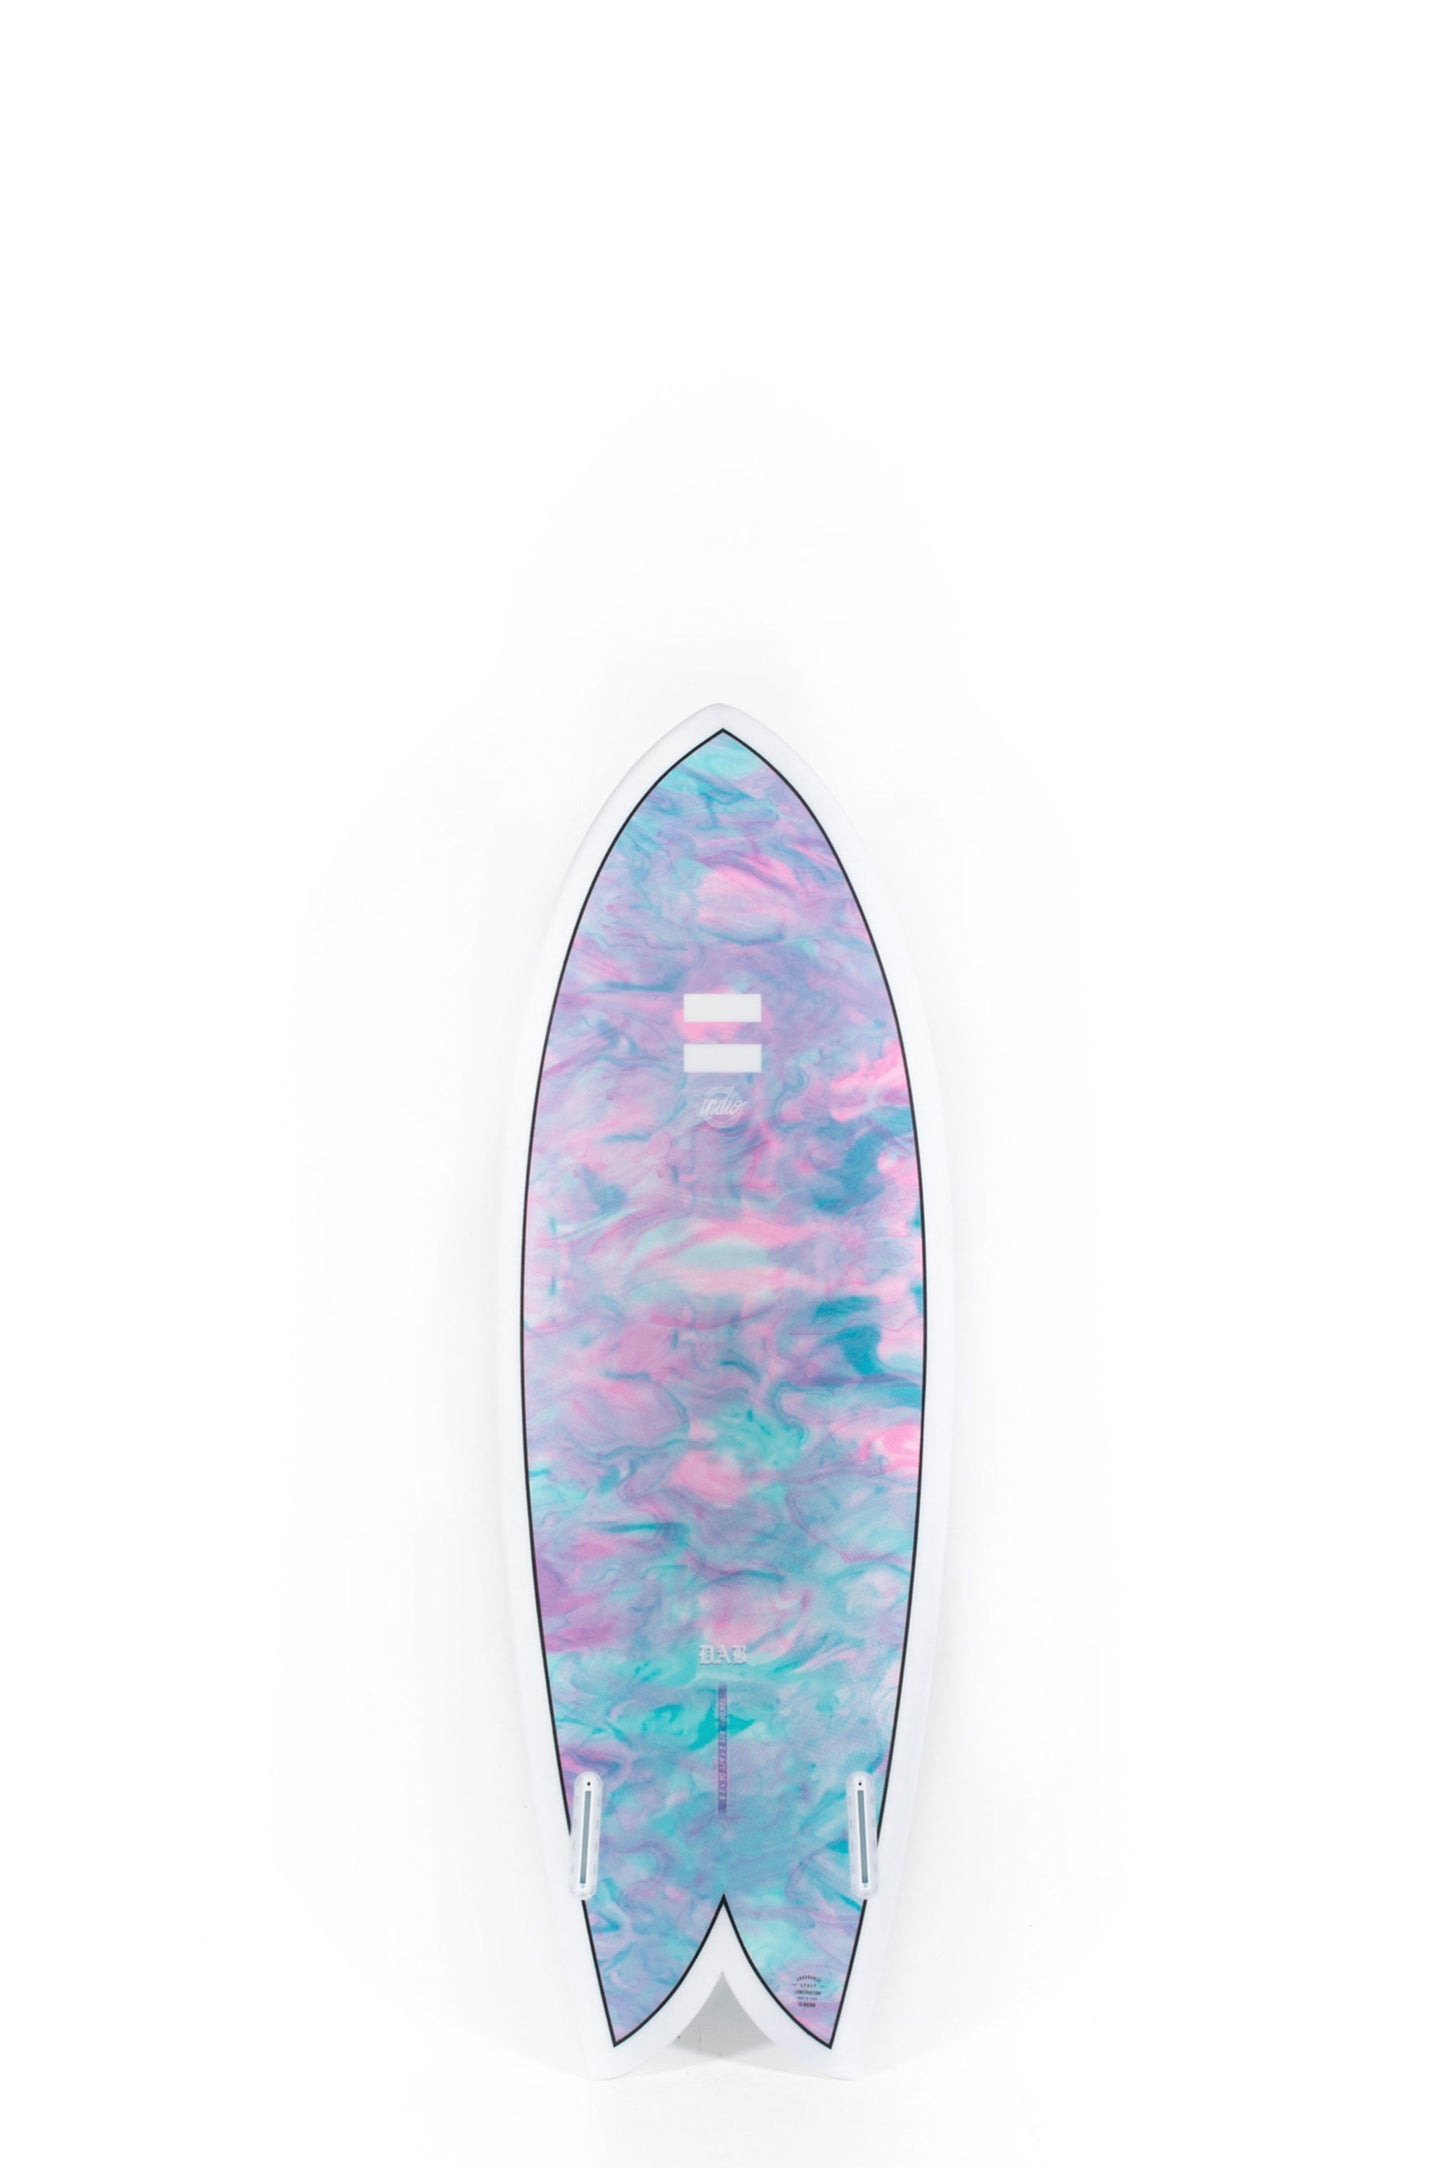 Pukas Surf Shop - Indio Surfboards - DAB Swirl Effect Blue Purple - 5’11” x 21 1/4 x 2 5/8 x 39.9L.